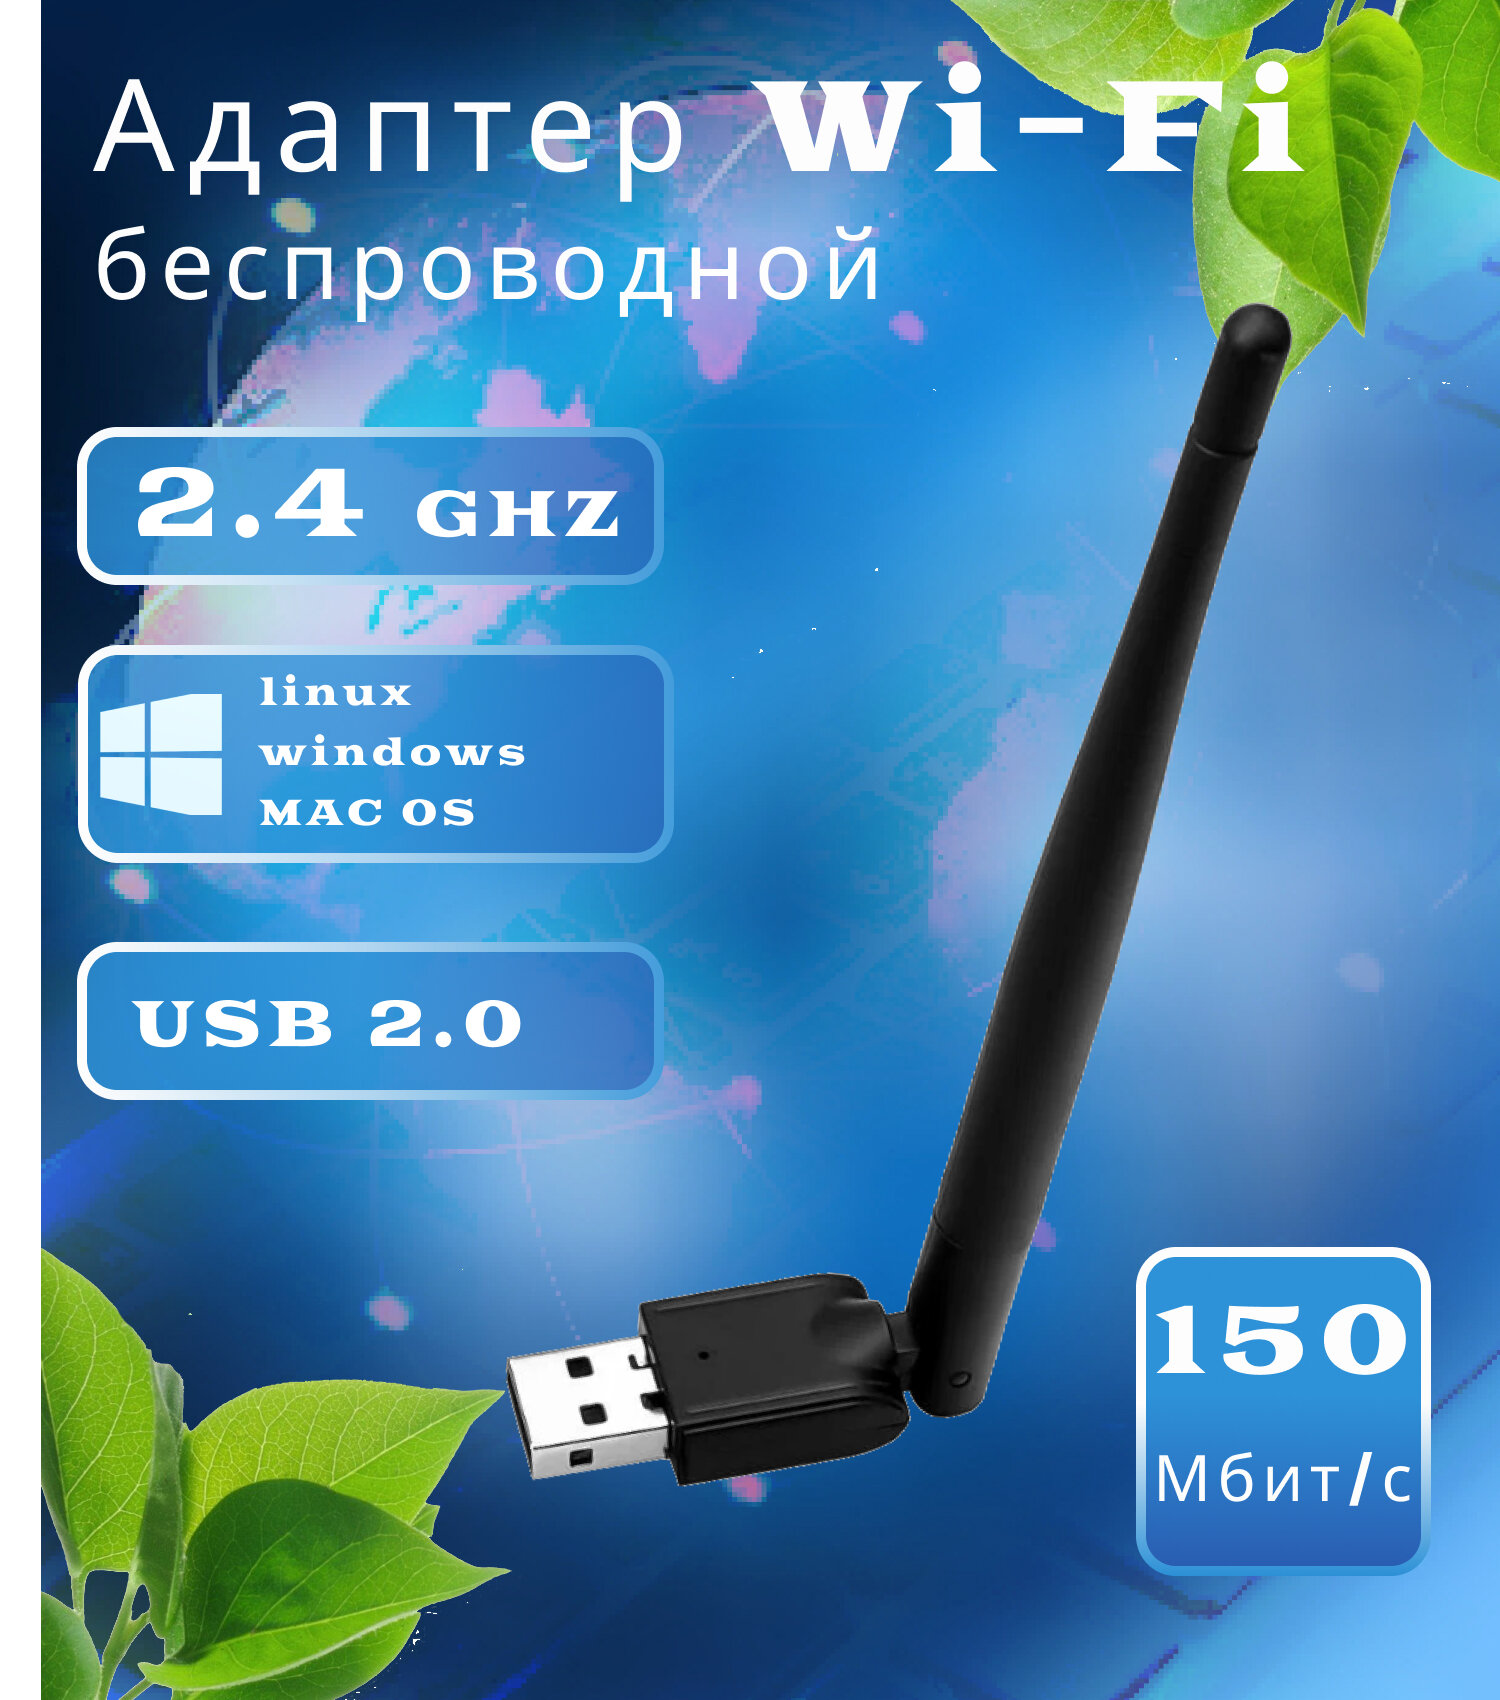 Адаптер USB беспроводной 802.11 WI-FI 150 Mbps